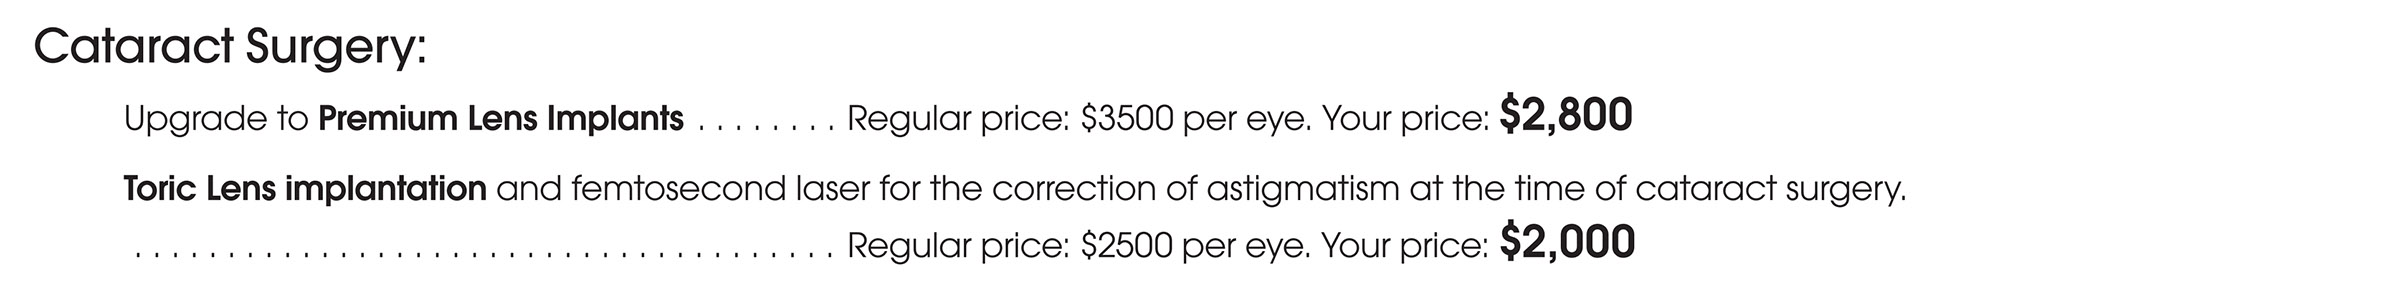 CWC Cataract Pricing